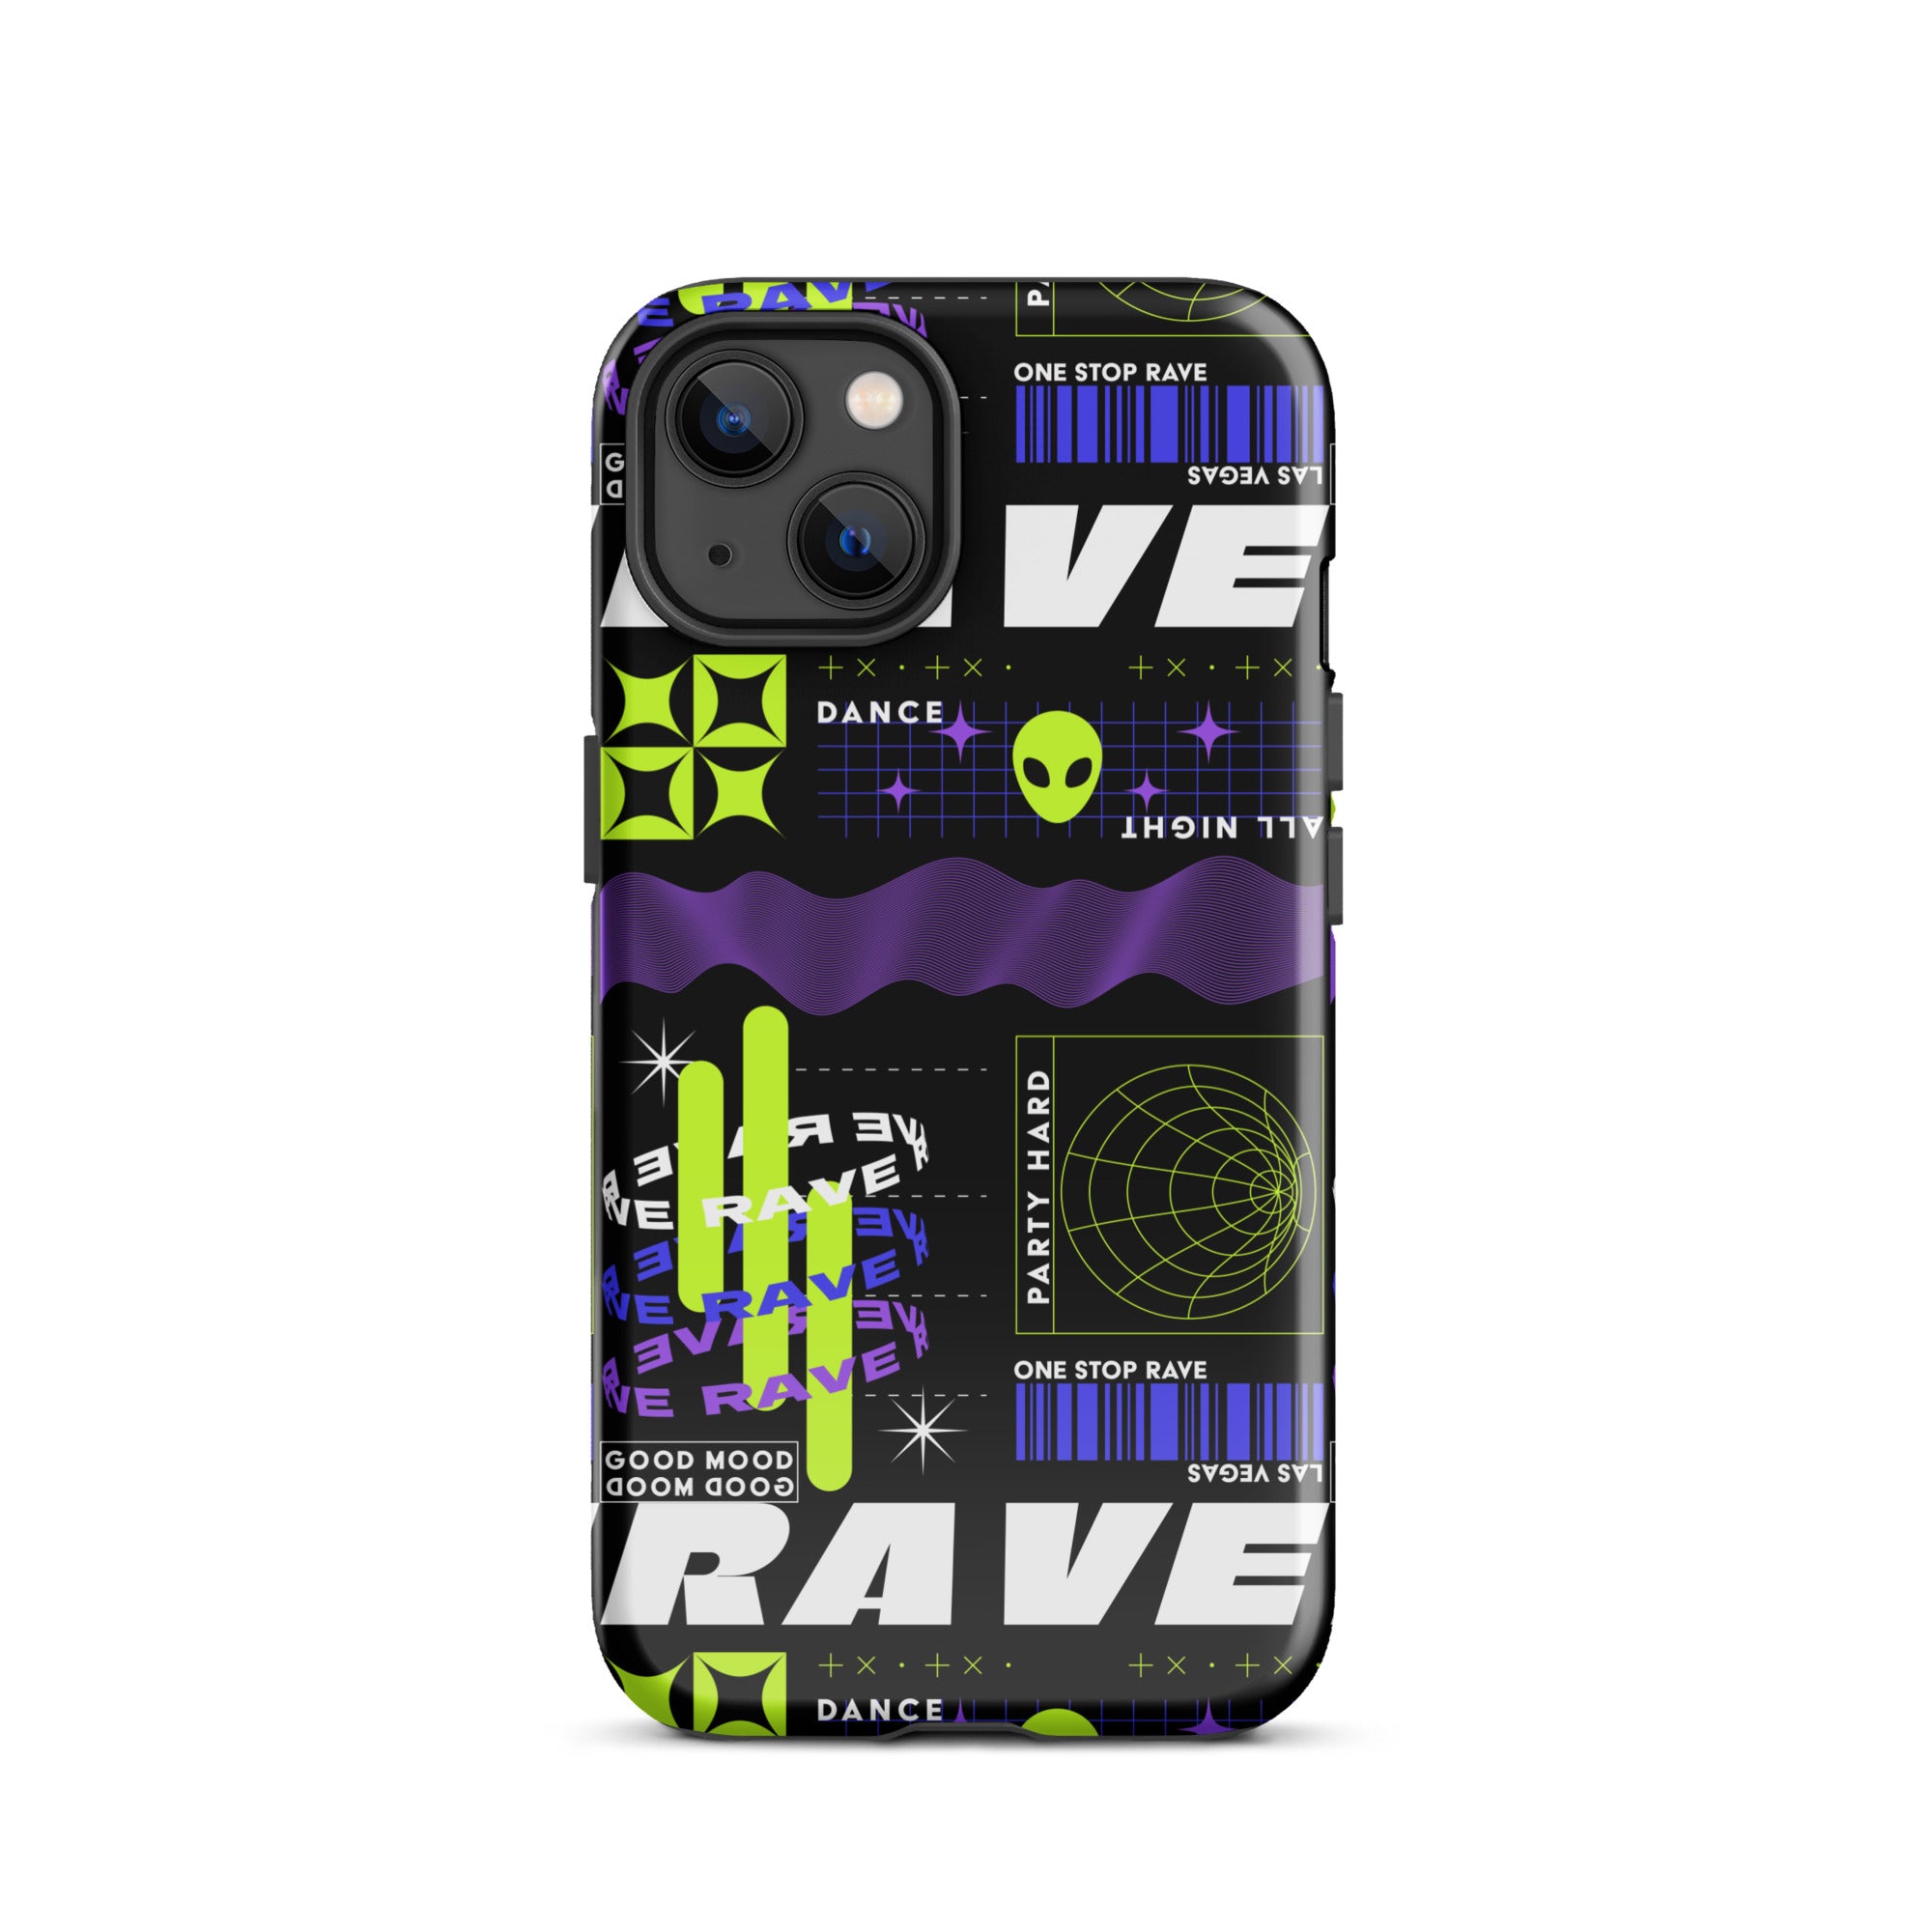 Retro Rave Tough Case for iPhone®